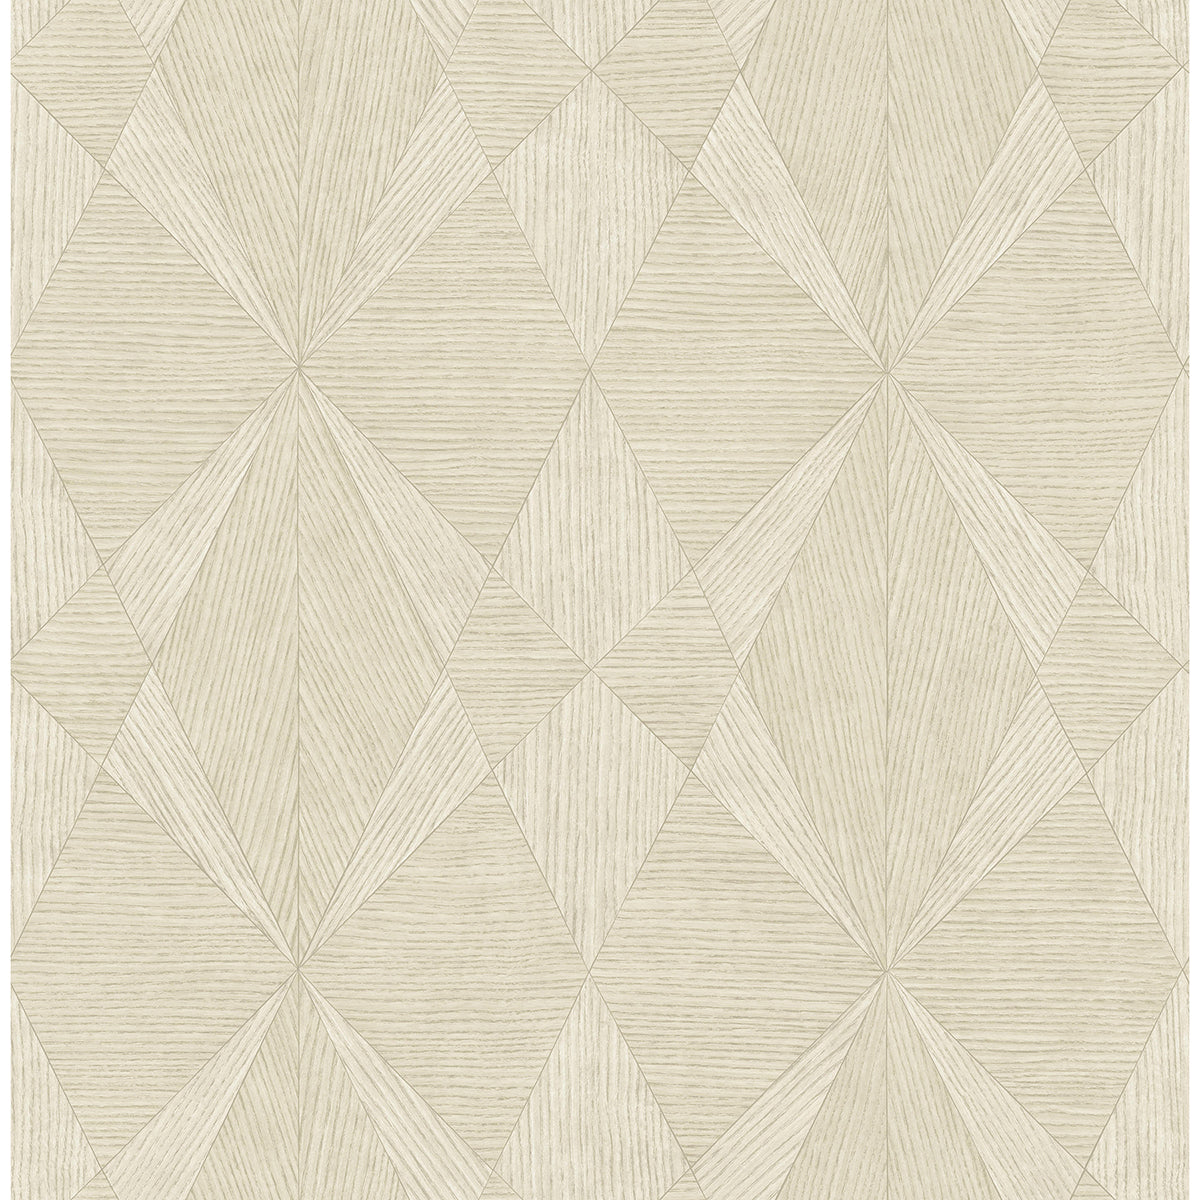 Picture of Intrinsic Bone Textured Geometric Wallpaper